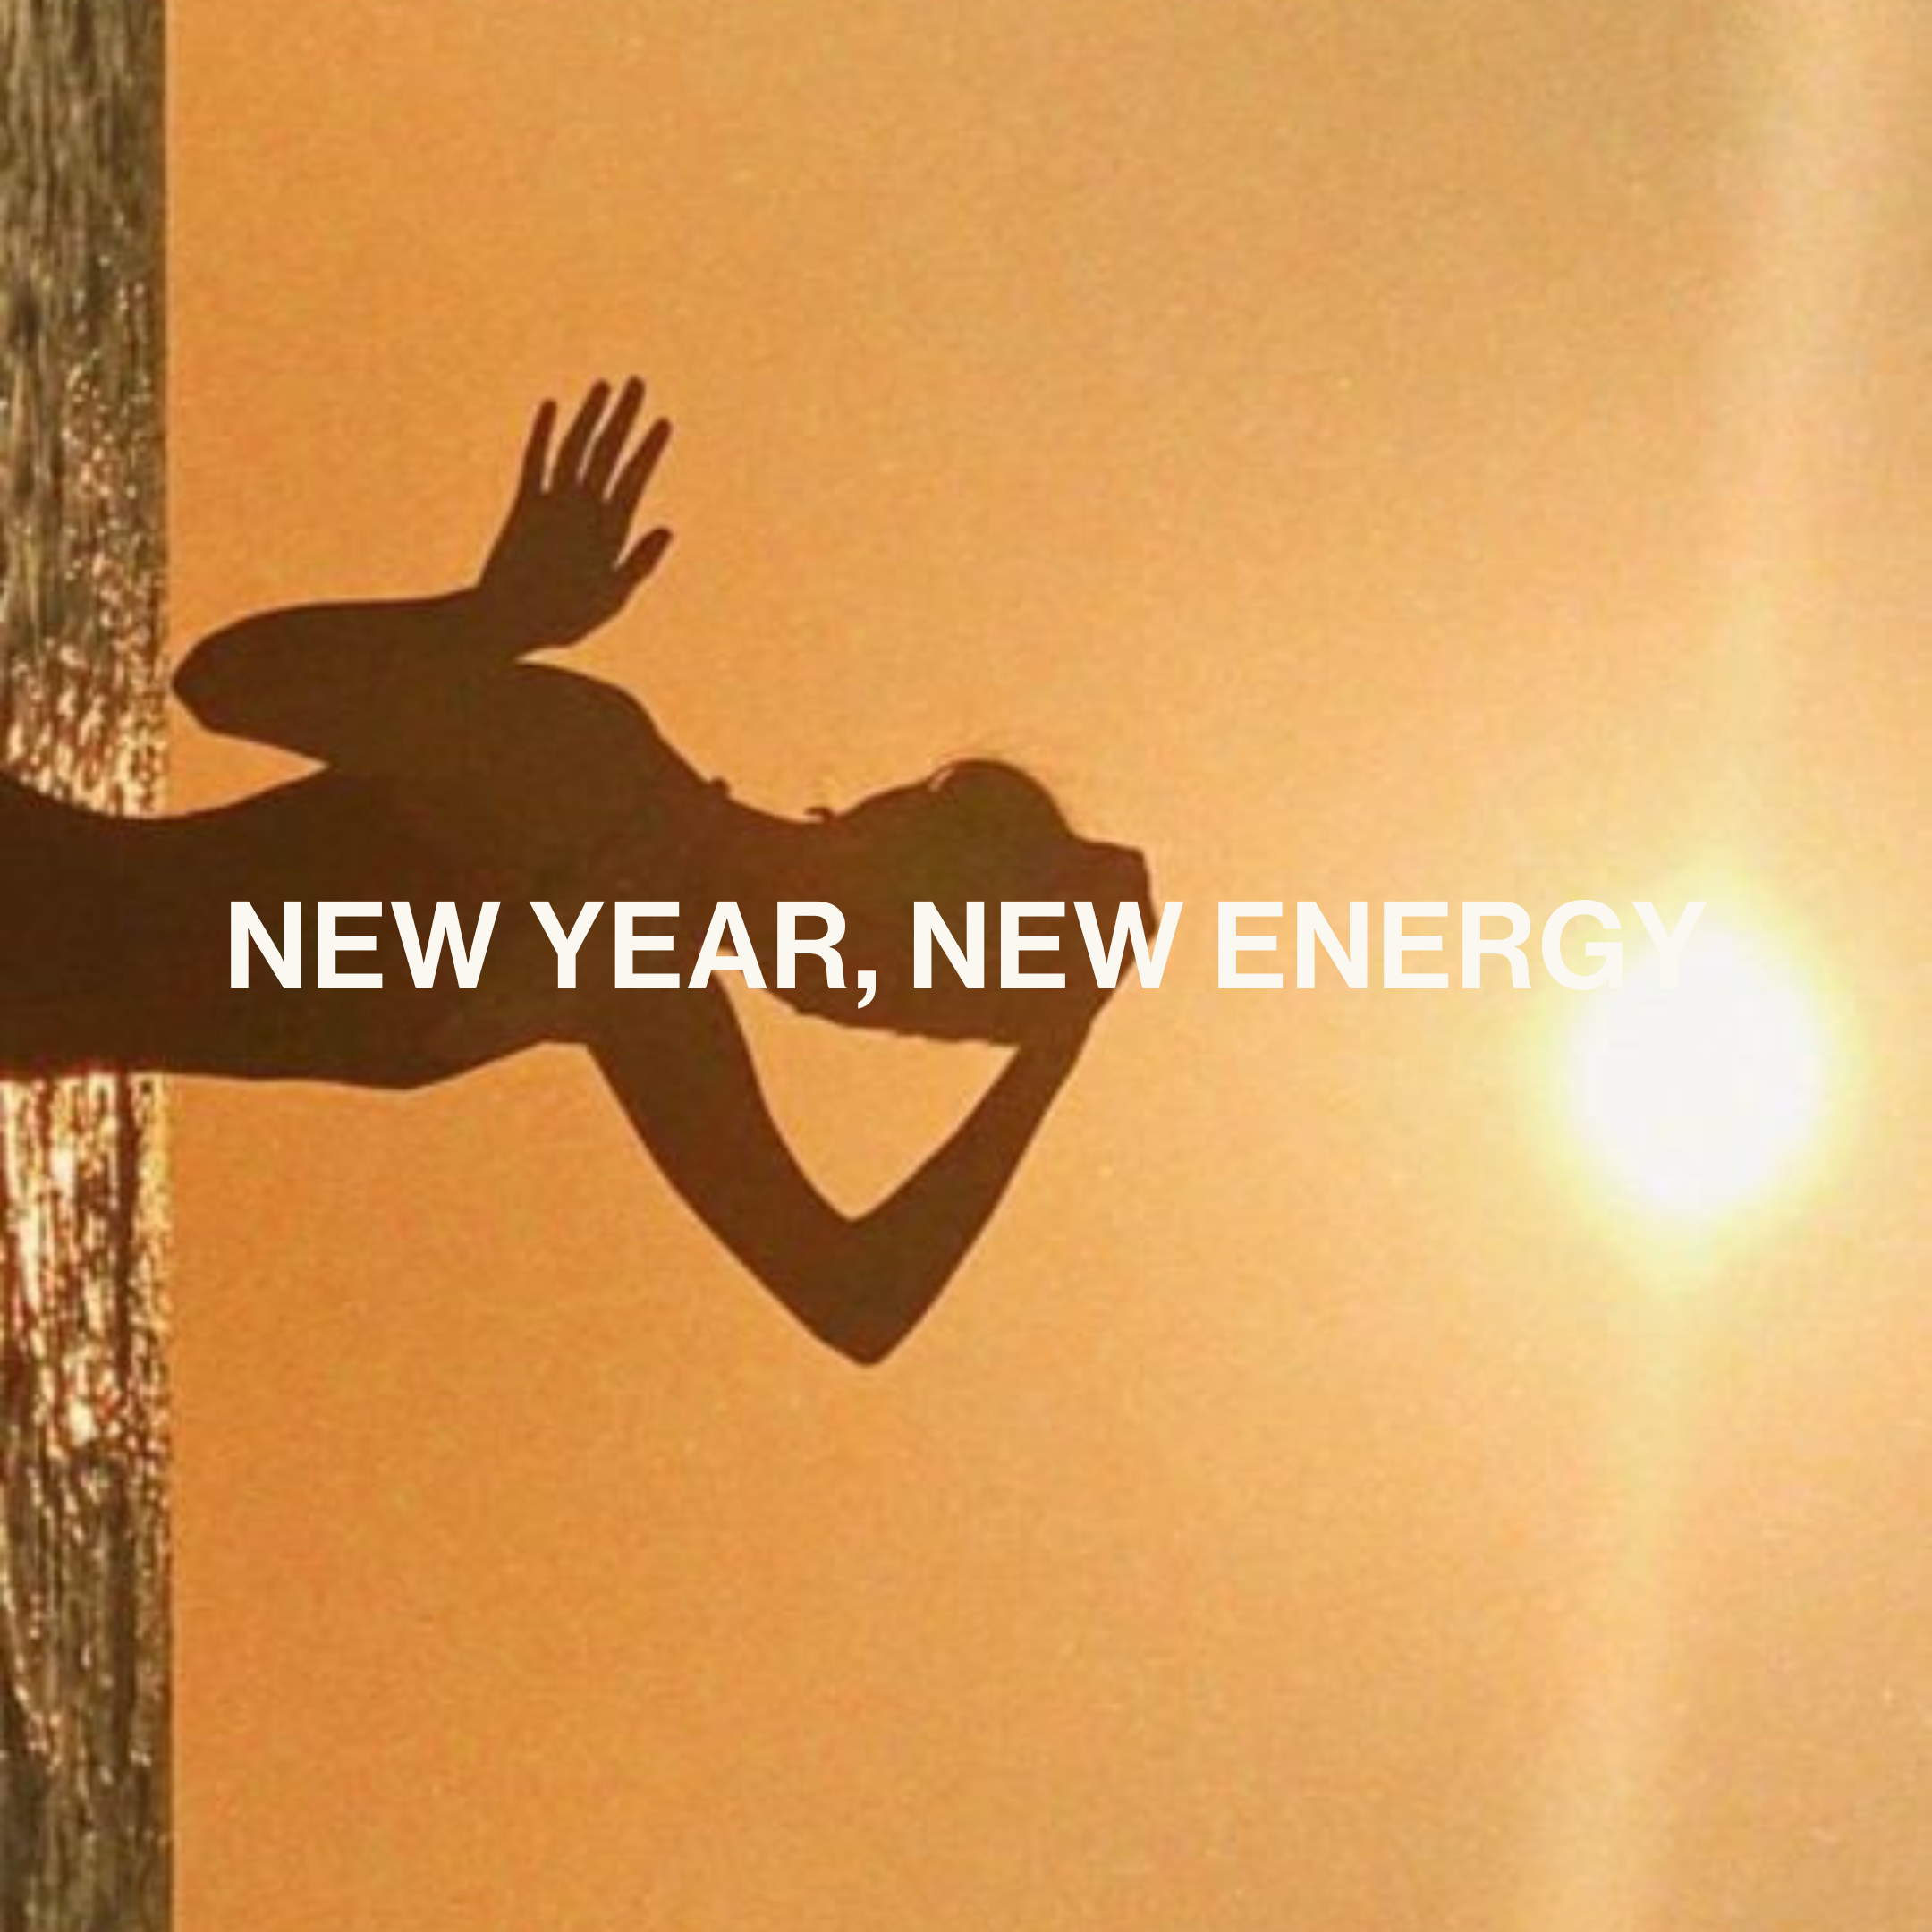 New Year, New Energy.